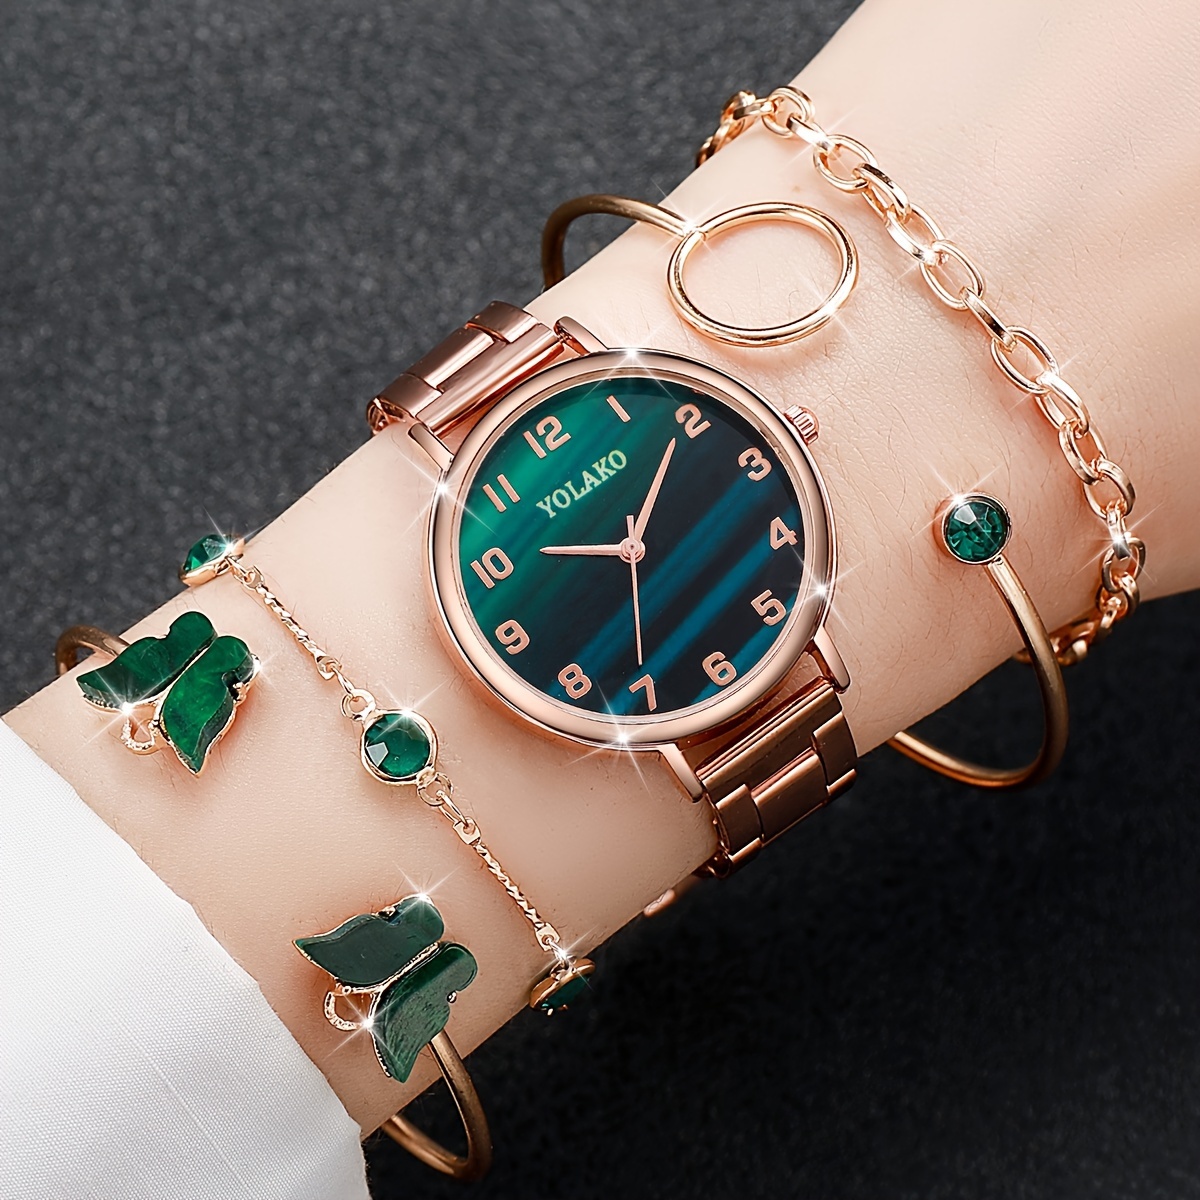 

5pcs/set Women's Elegant Green Quartz Watch Analog Steel Band Wrist Watch & Butterfly Bracelets, Gift For Mom Her